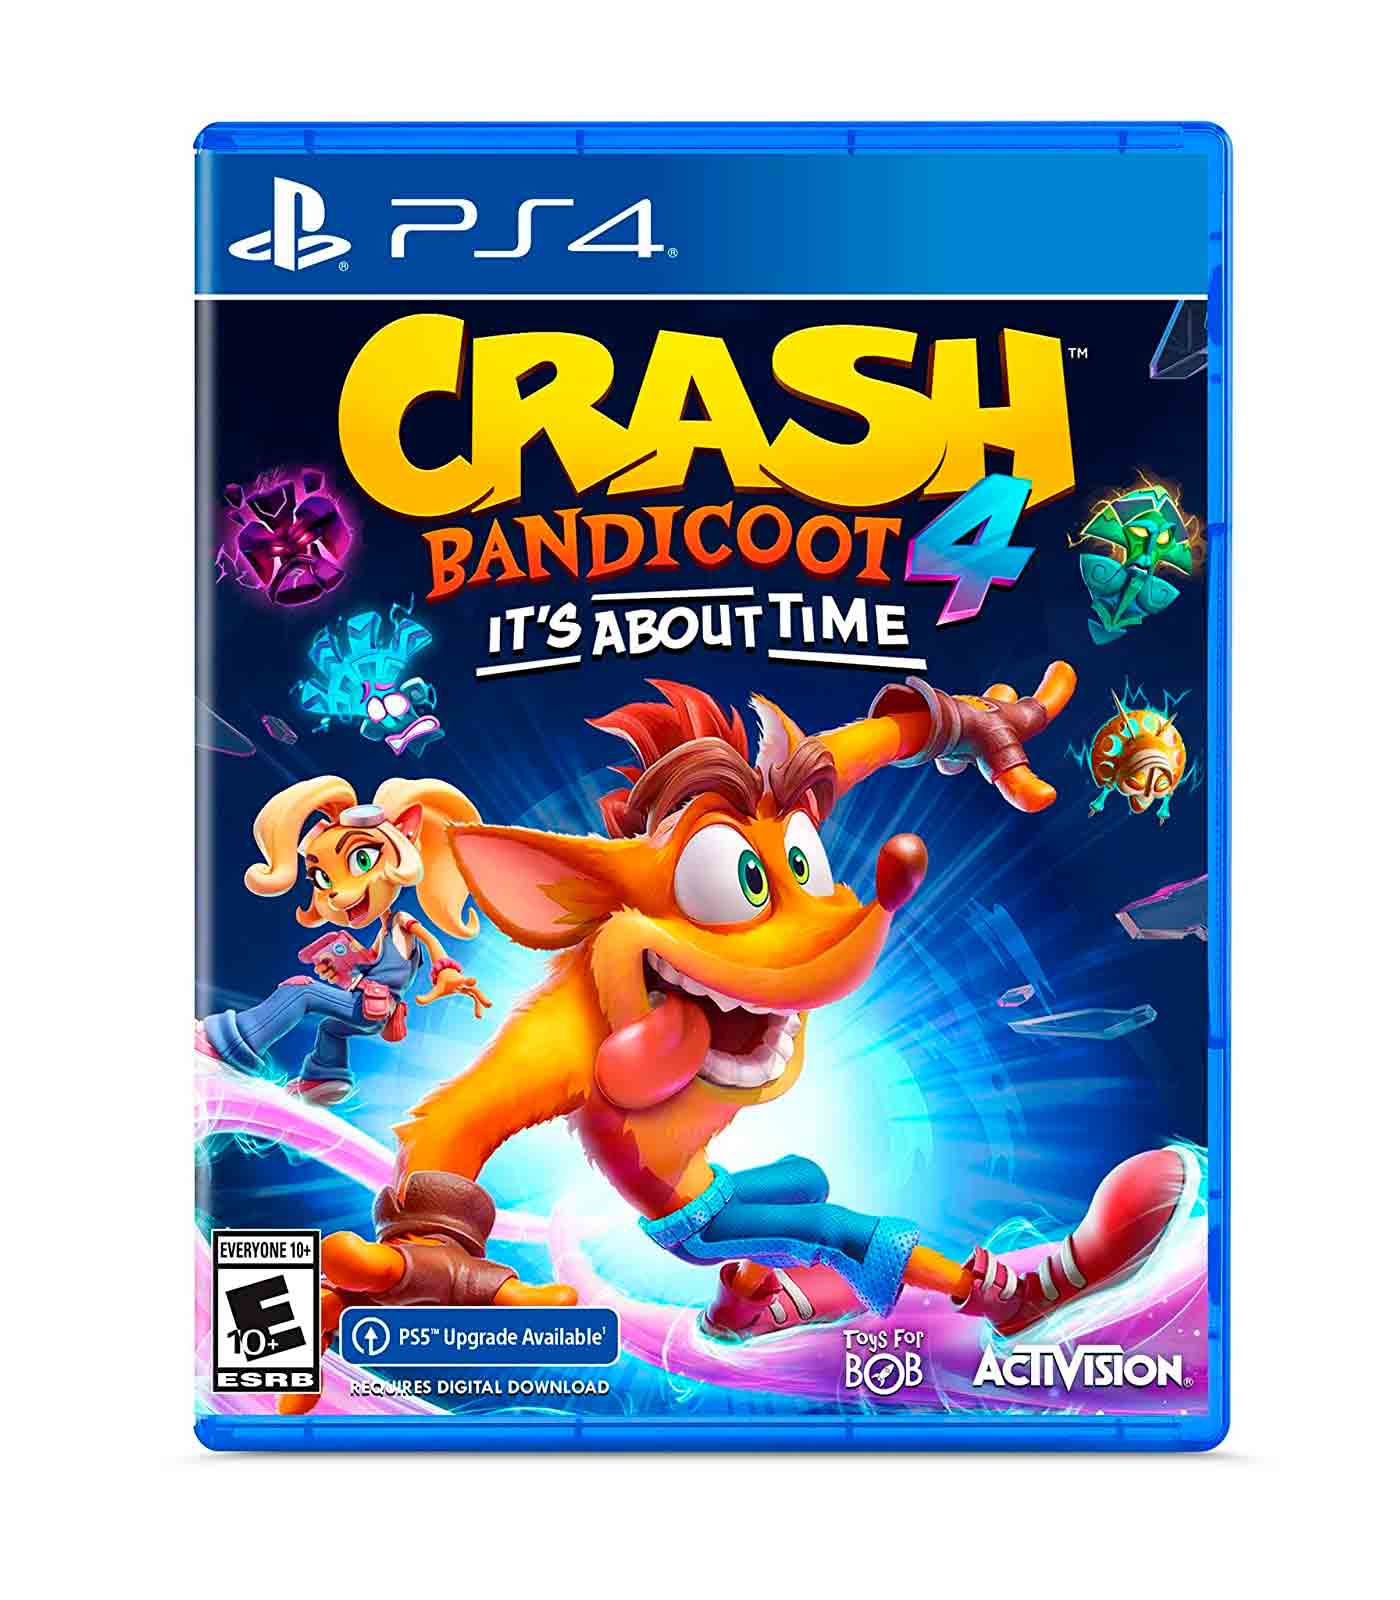 Crash bandicoot 4